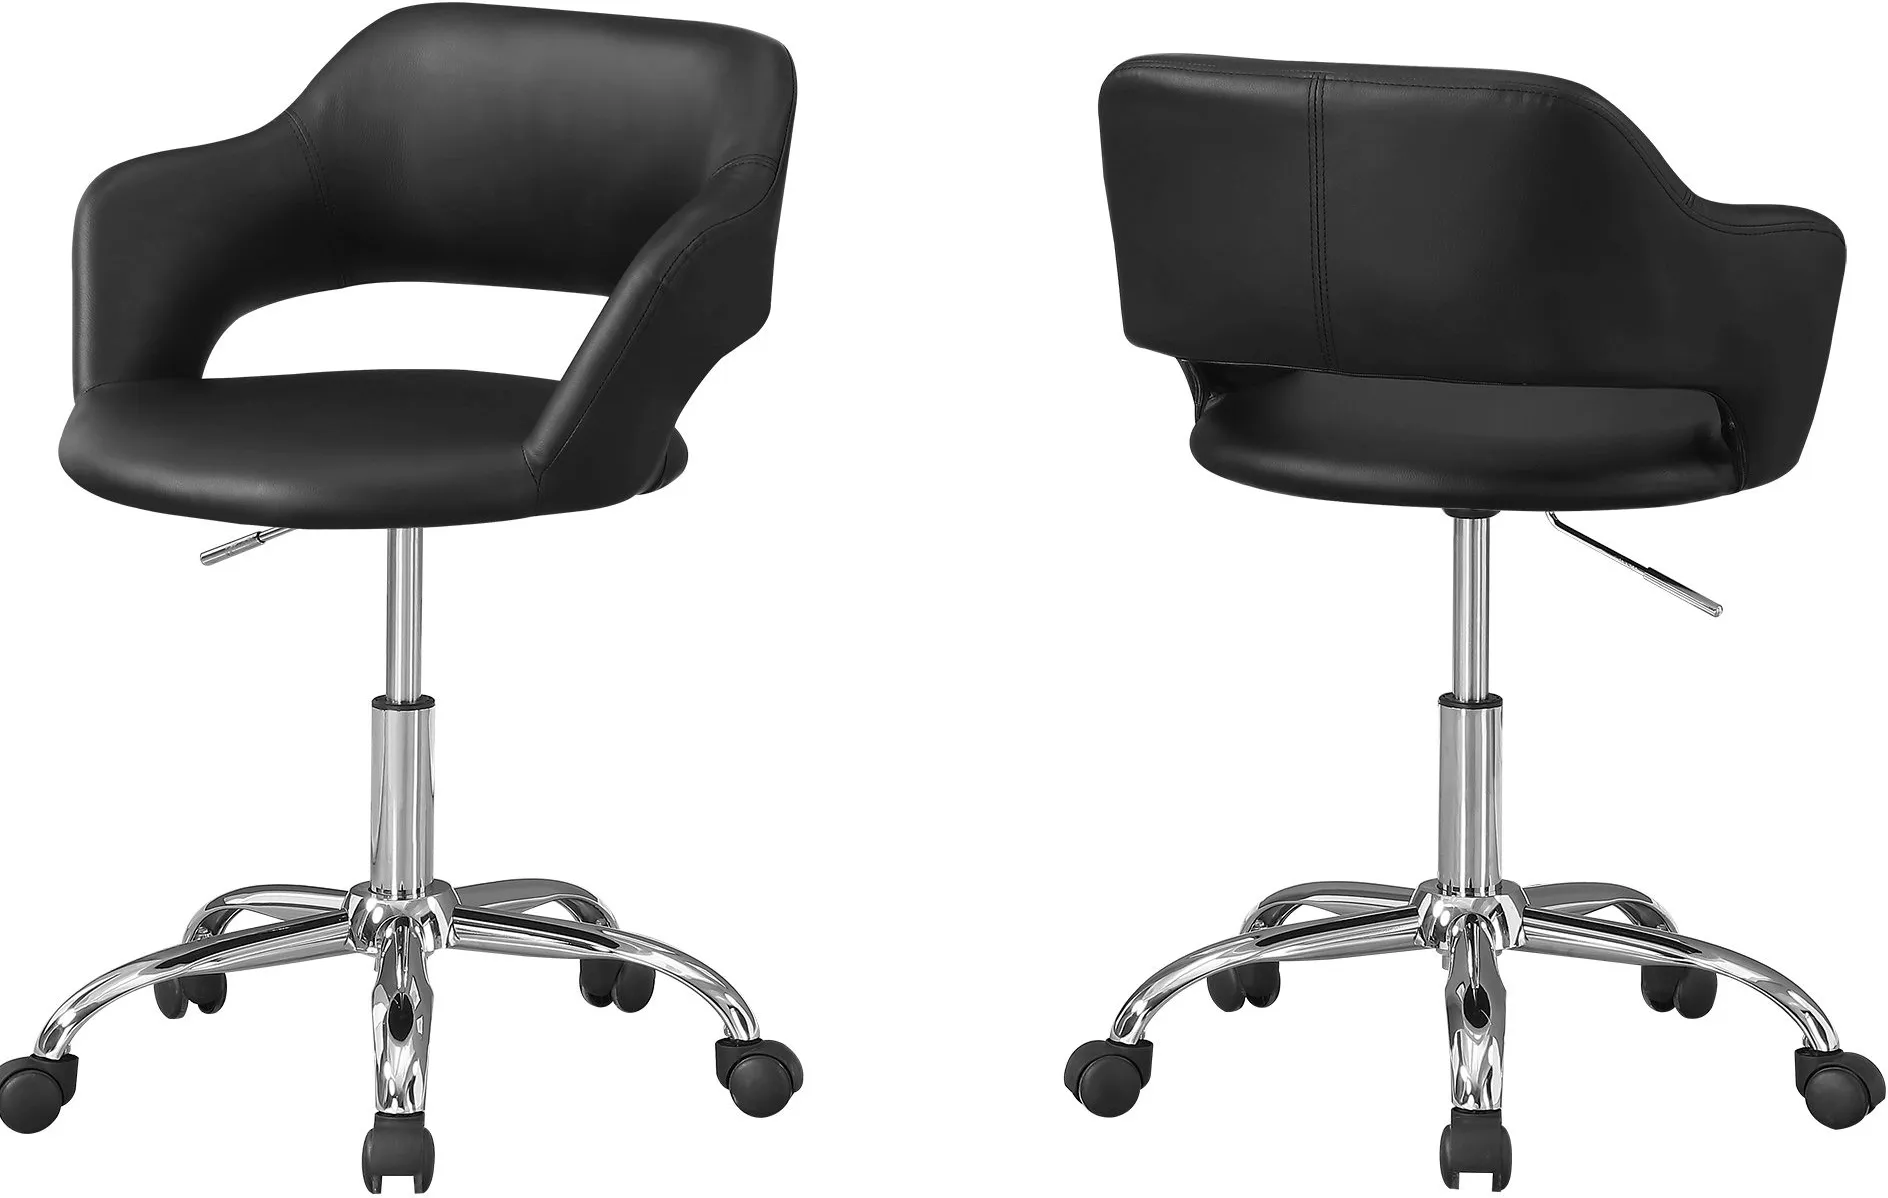 Office Chair, Adjustable Height, Swivel, Ergonomic, Armrests, Computer Desk, Work, Metal, Pu Leather Look, Black, Chrome, Contemporary, Modern